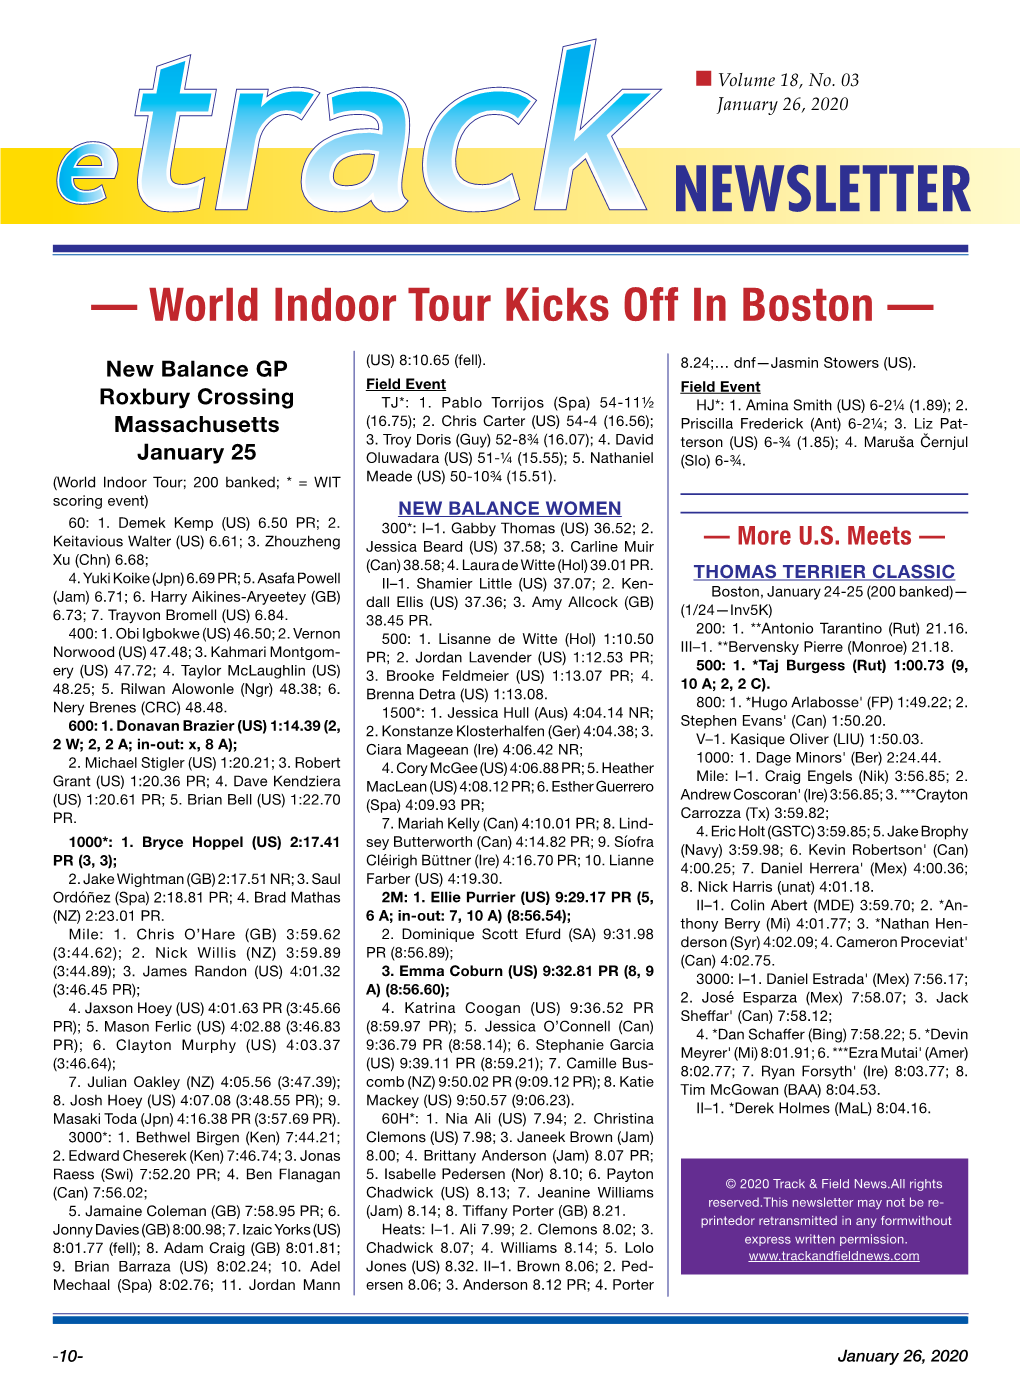 — World Indoor Tour Kicks Off in Boston —